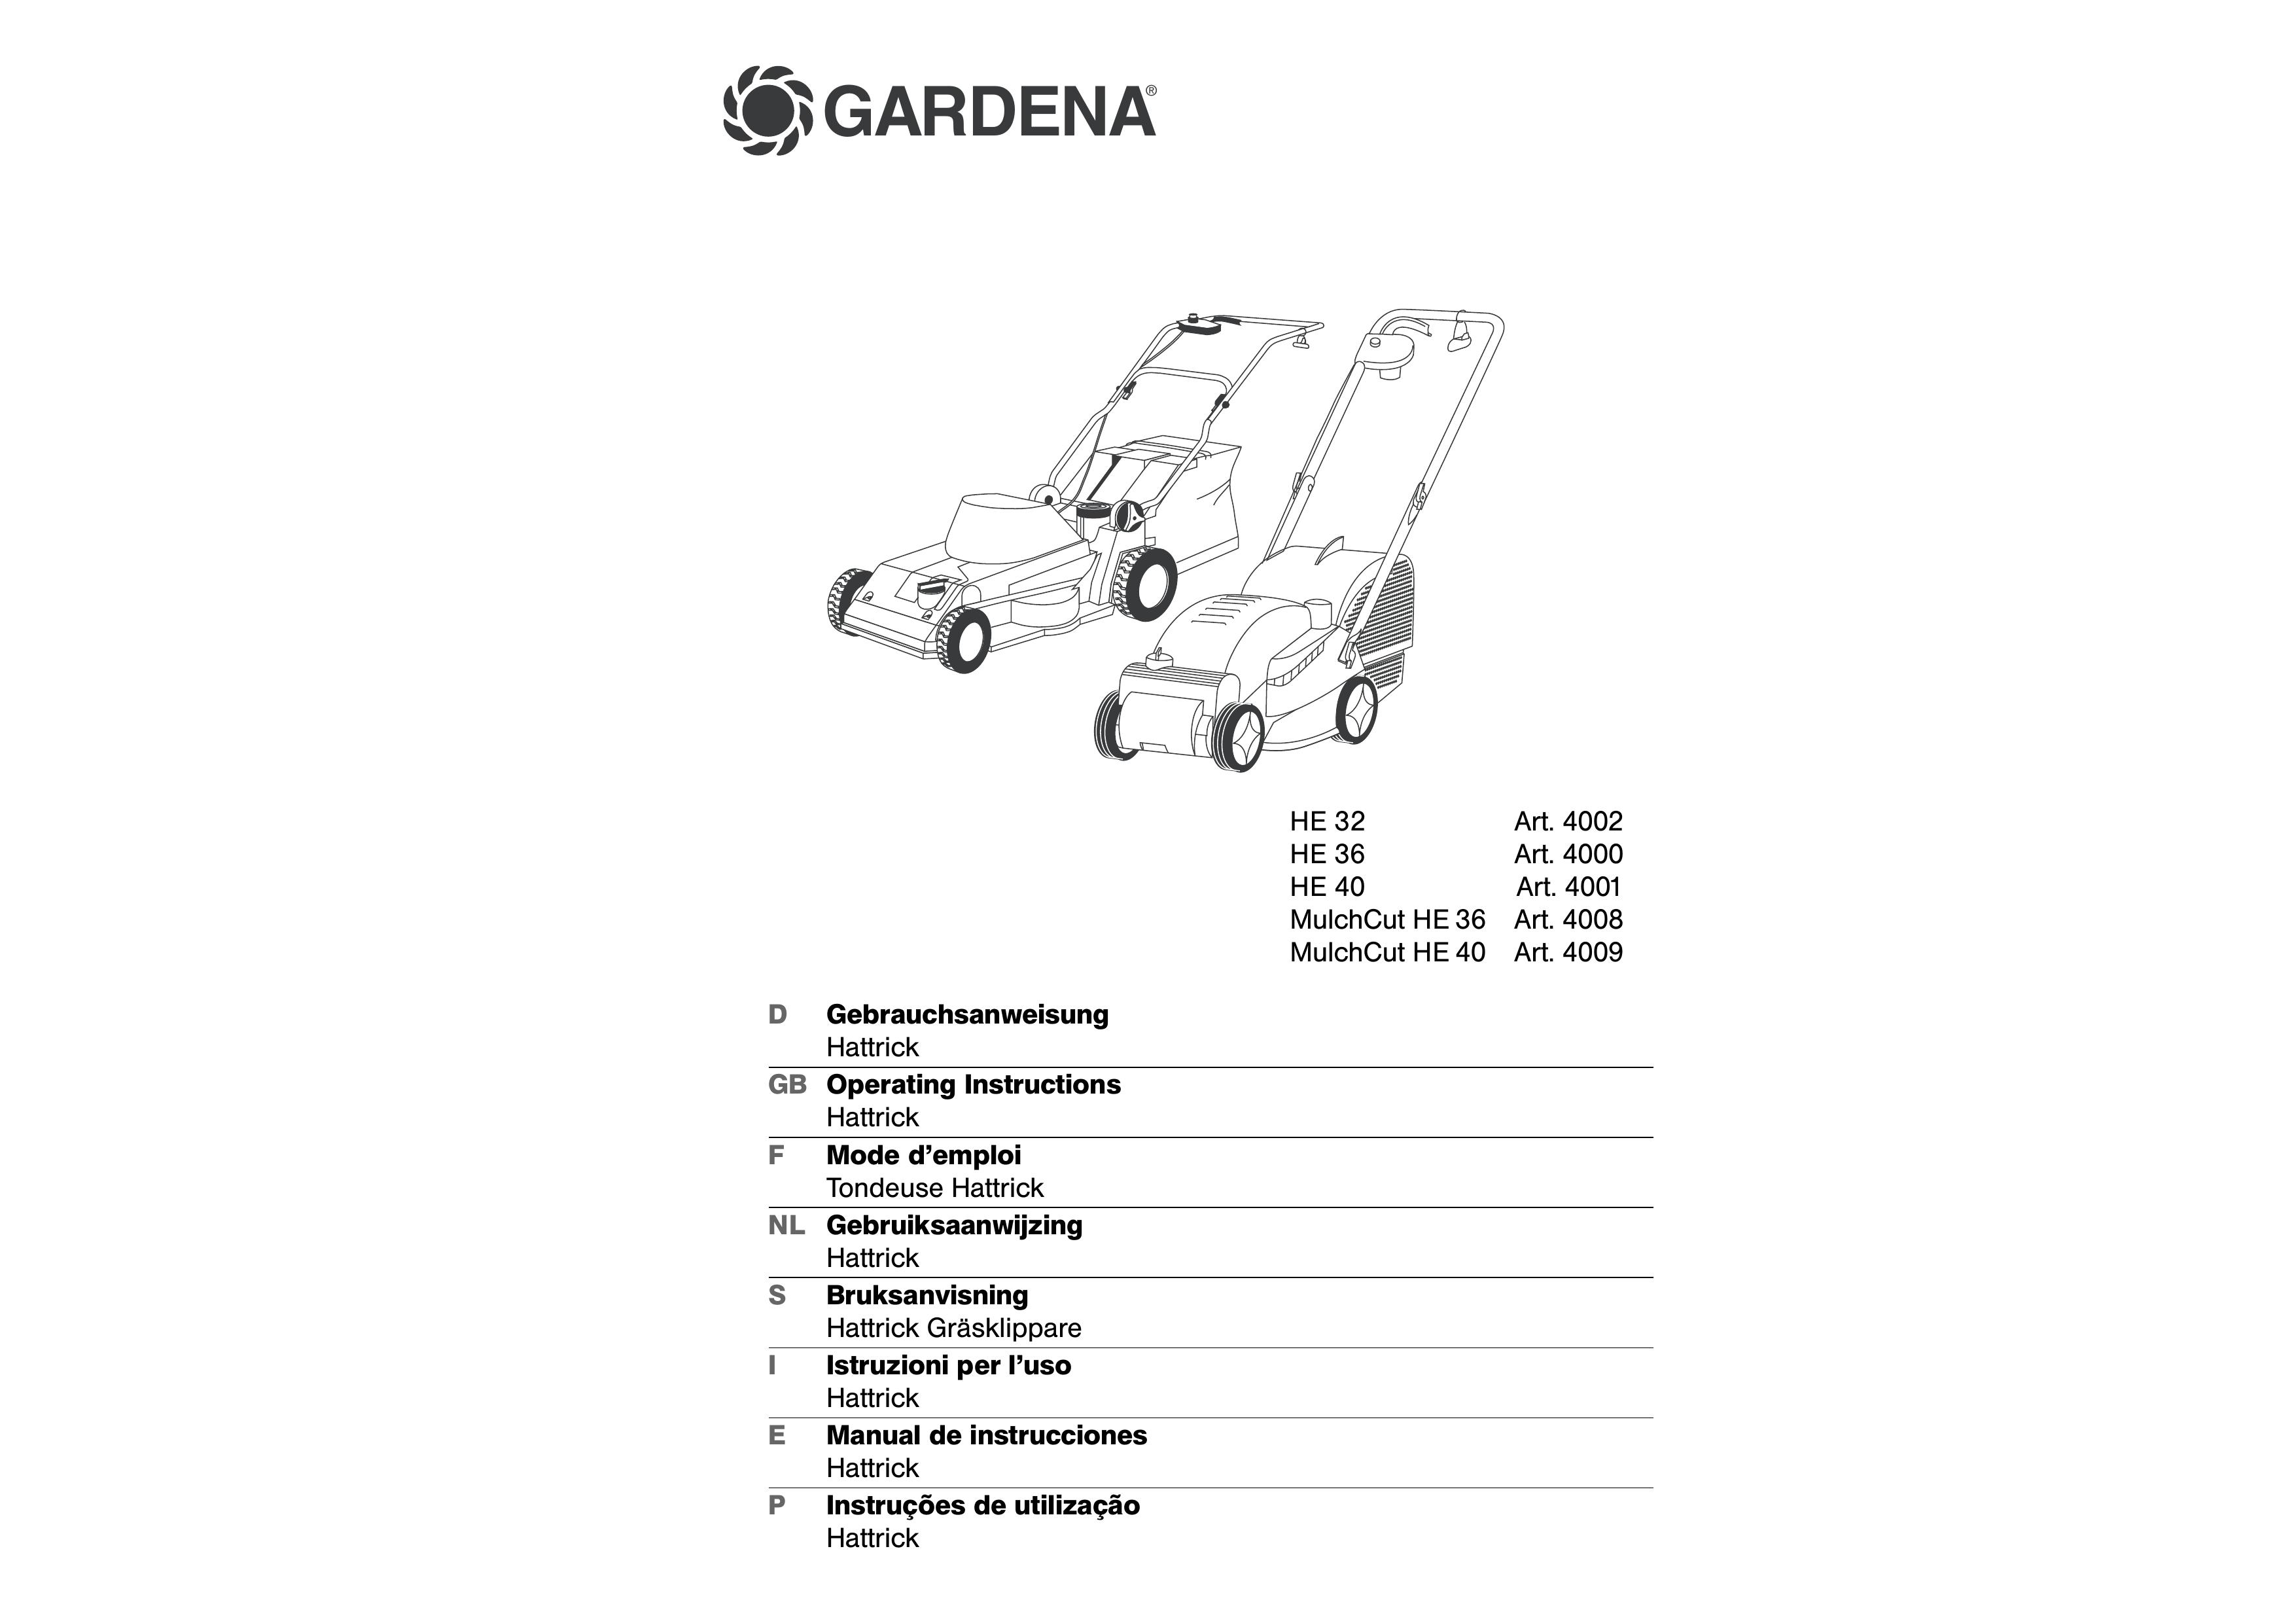 Gardena HE32 Lawn Mower User Manual